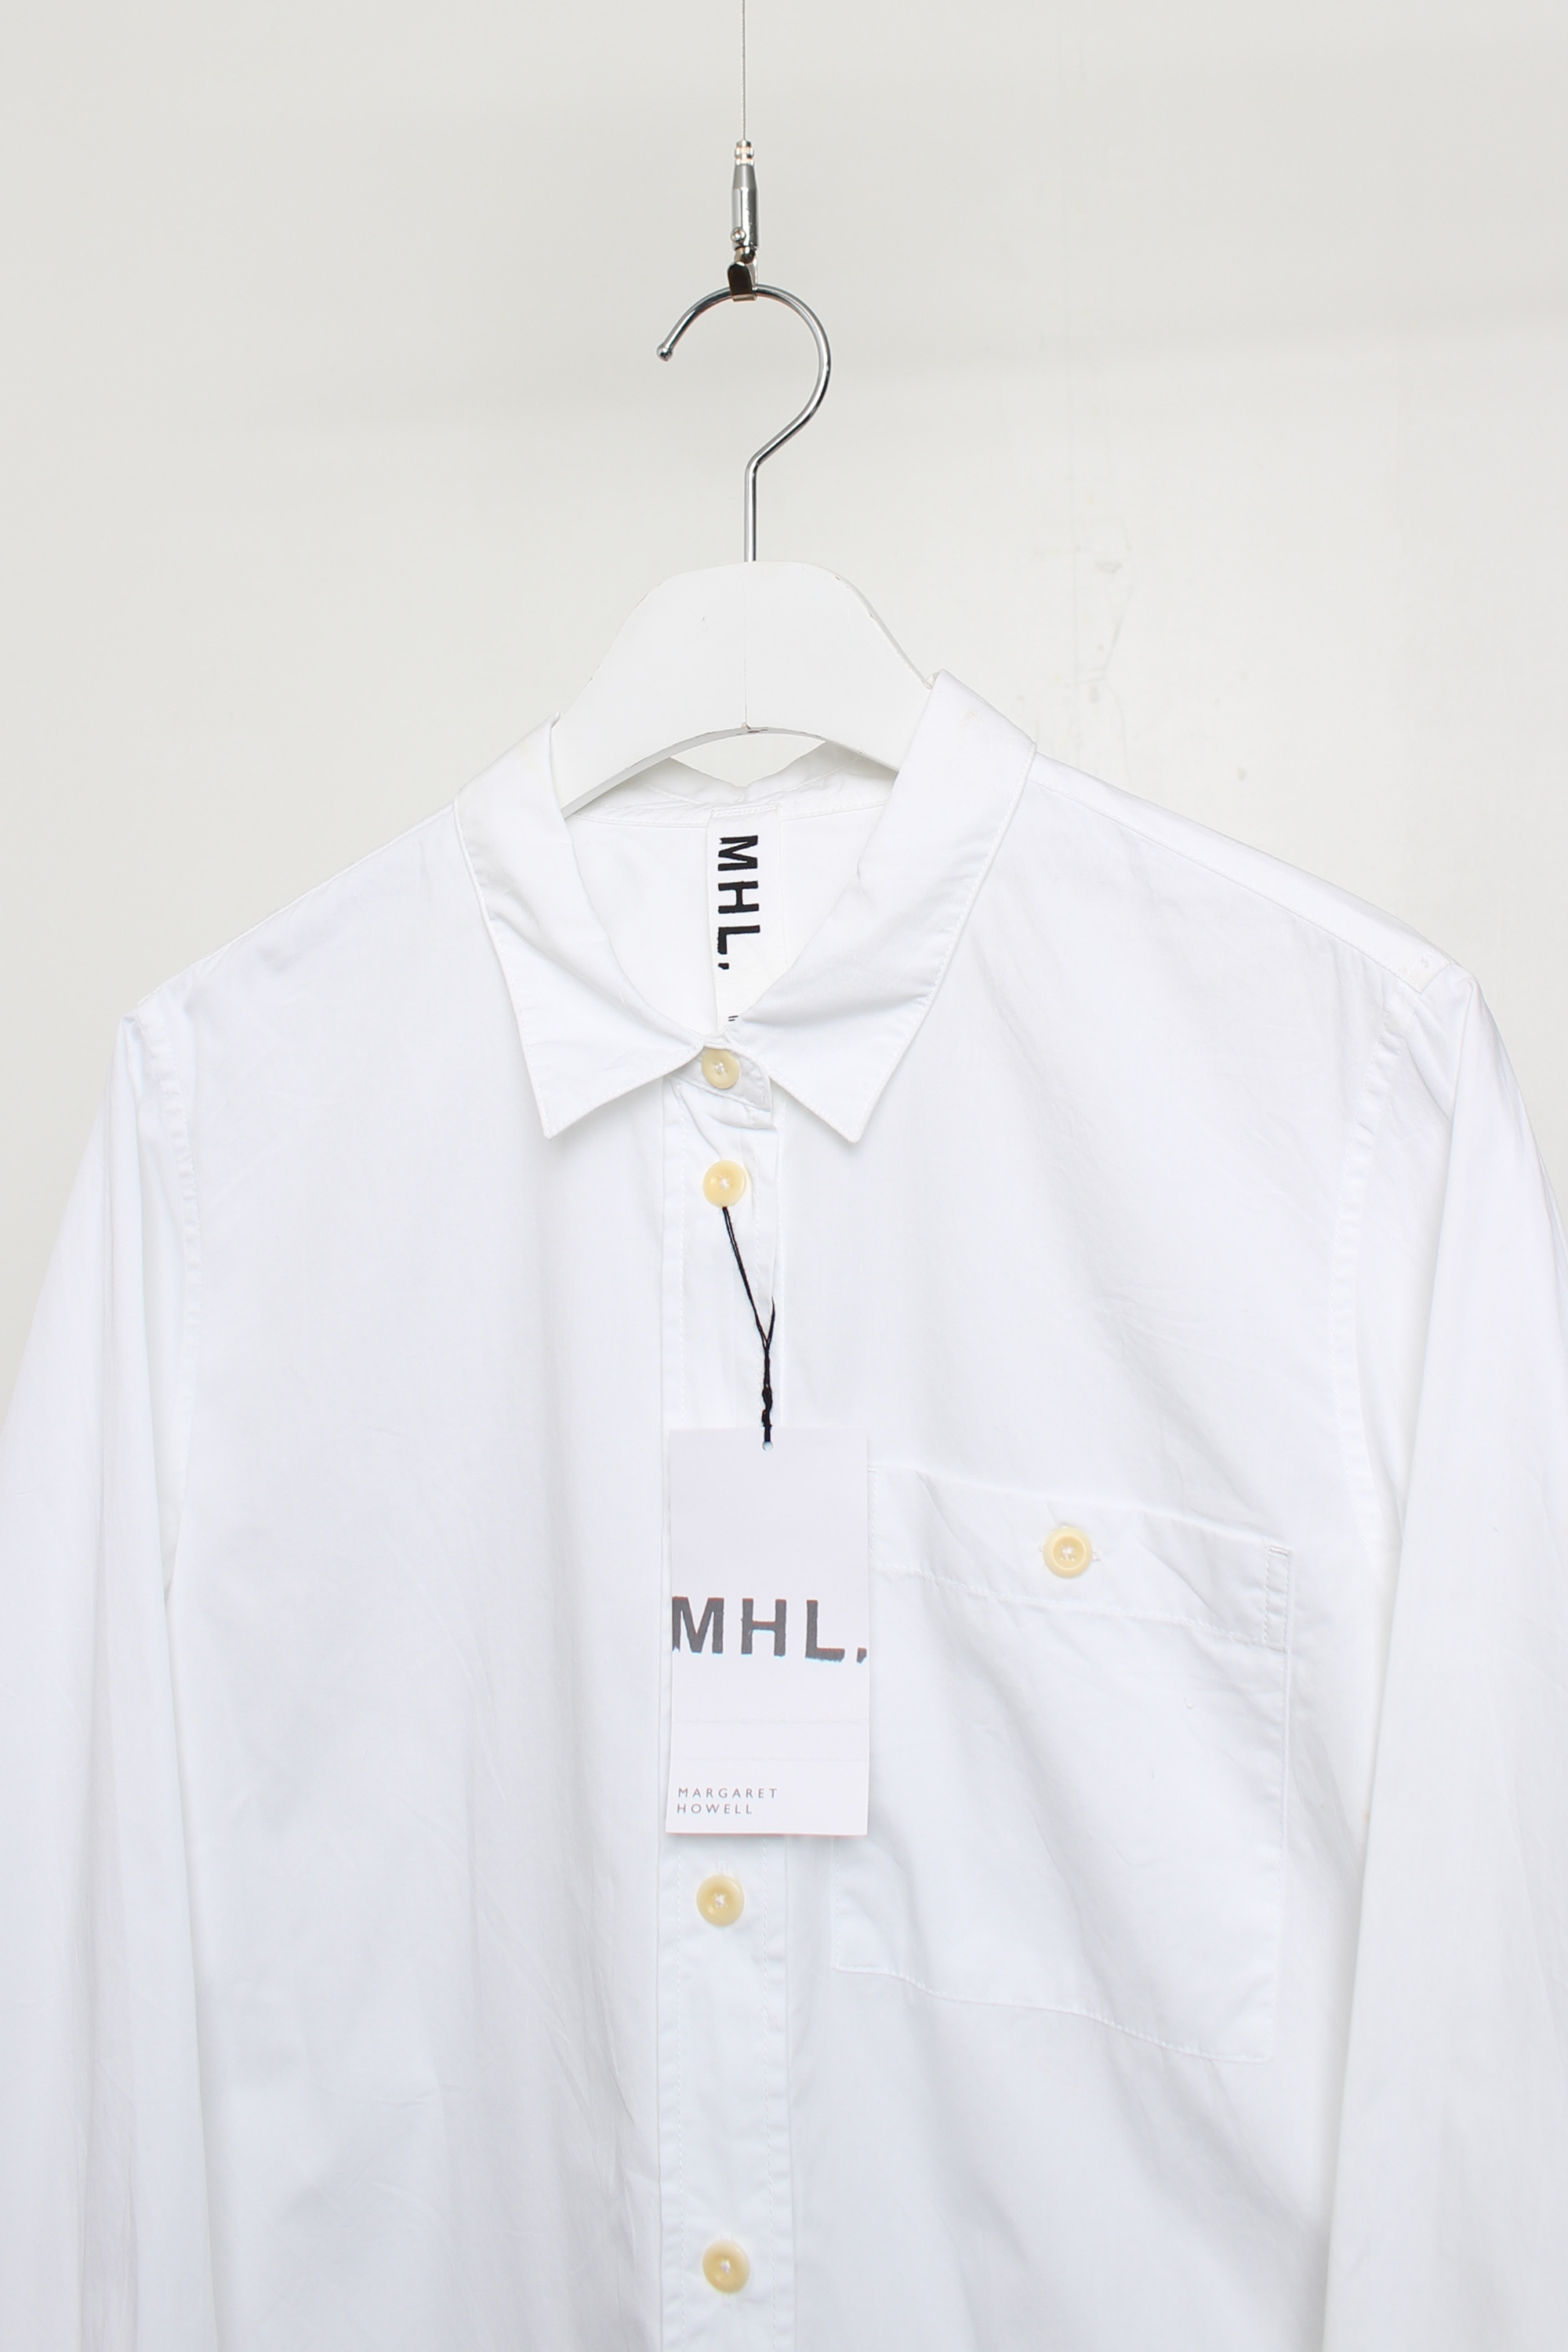 MHL cotton shirt